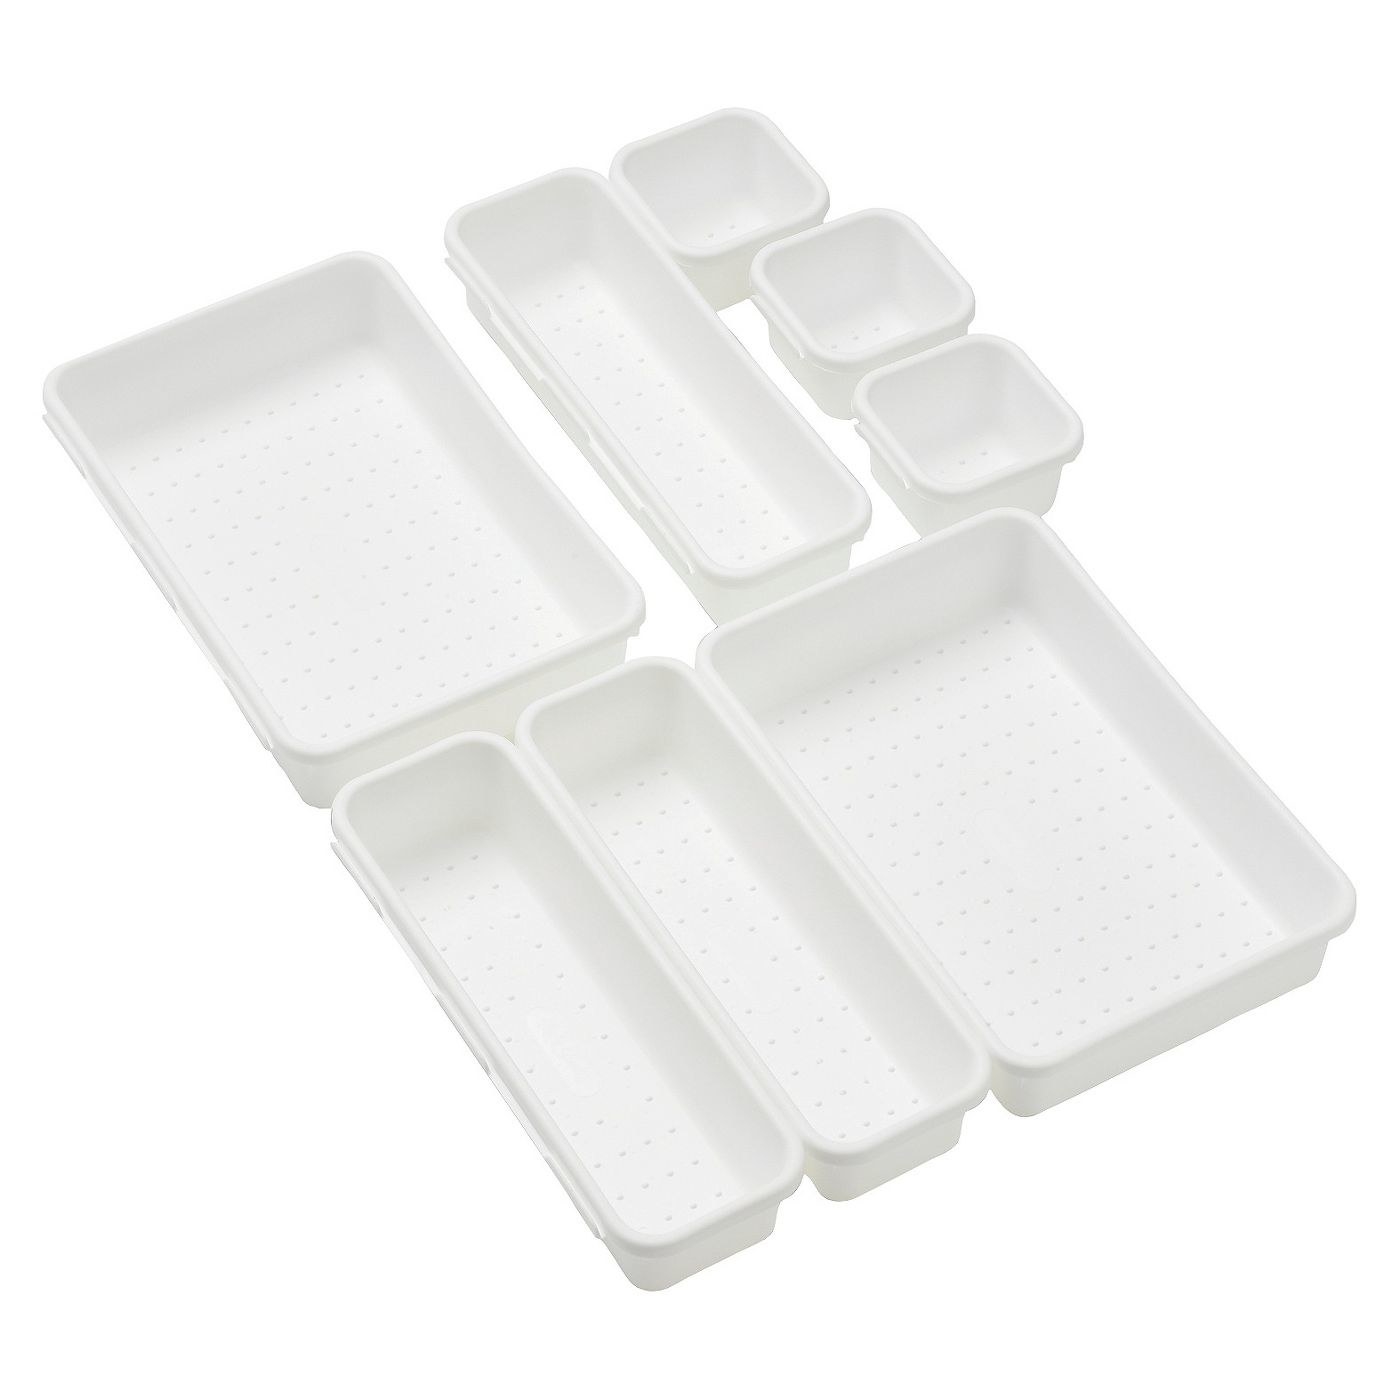 White drawer organizer set with eight bins